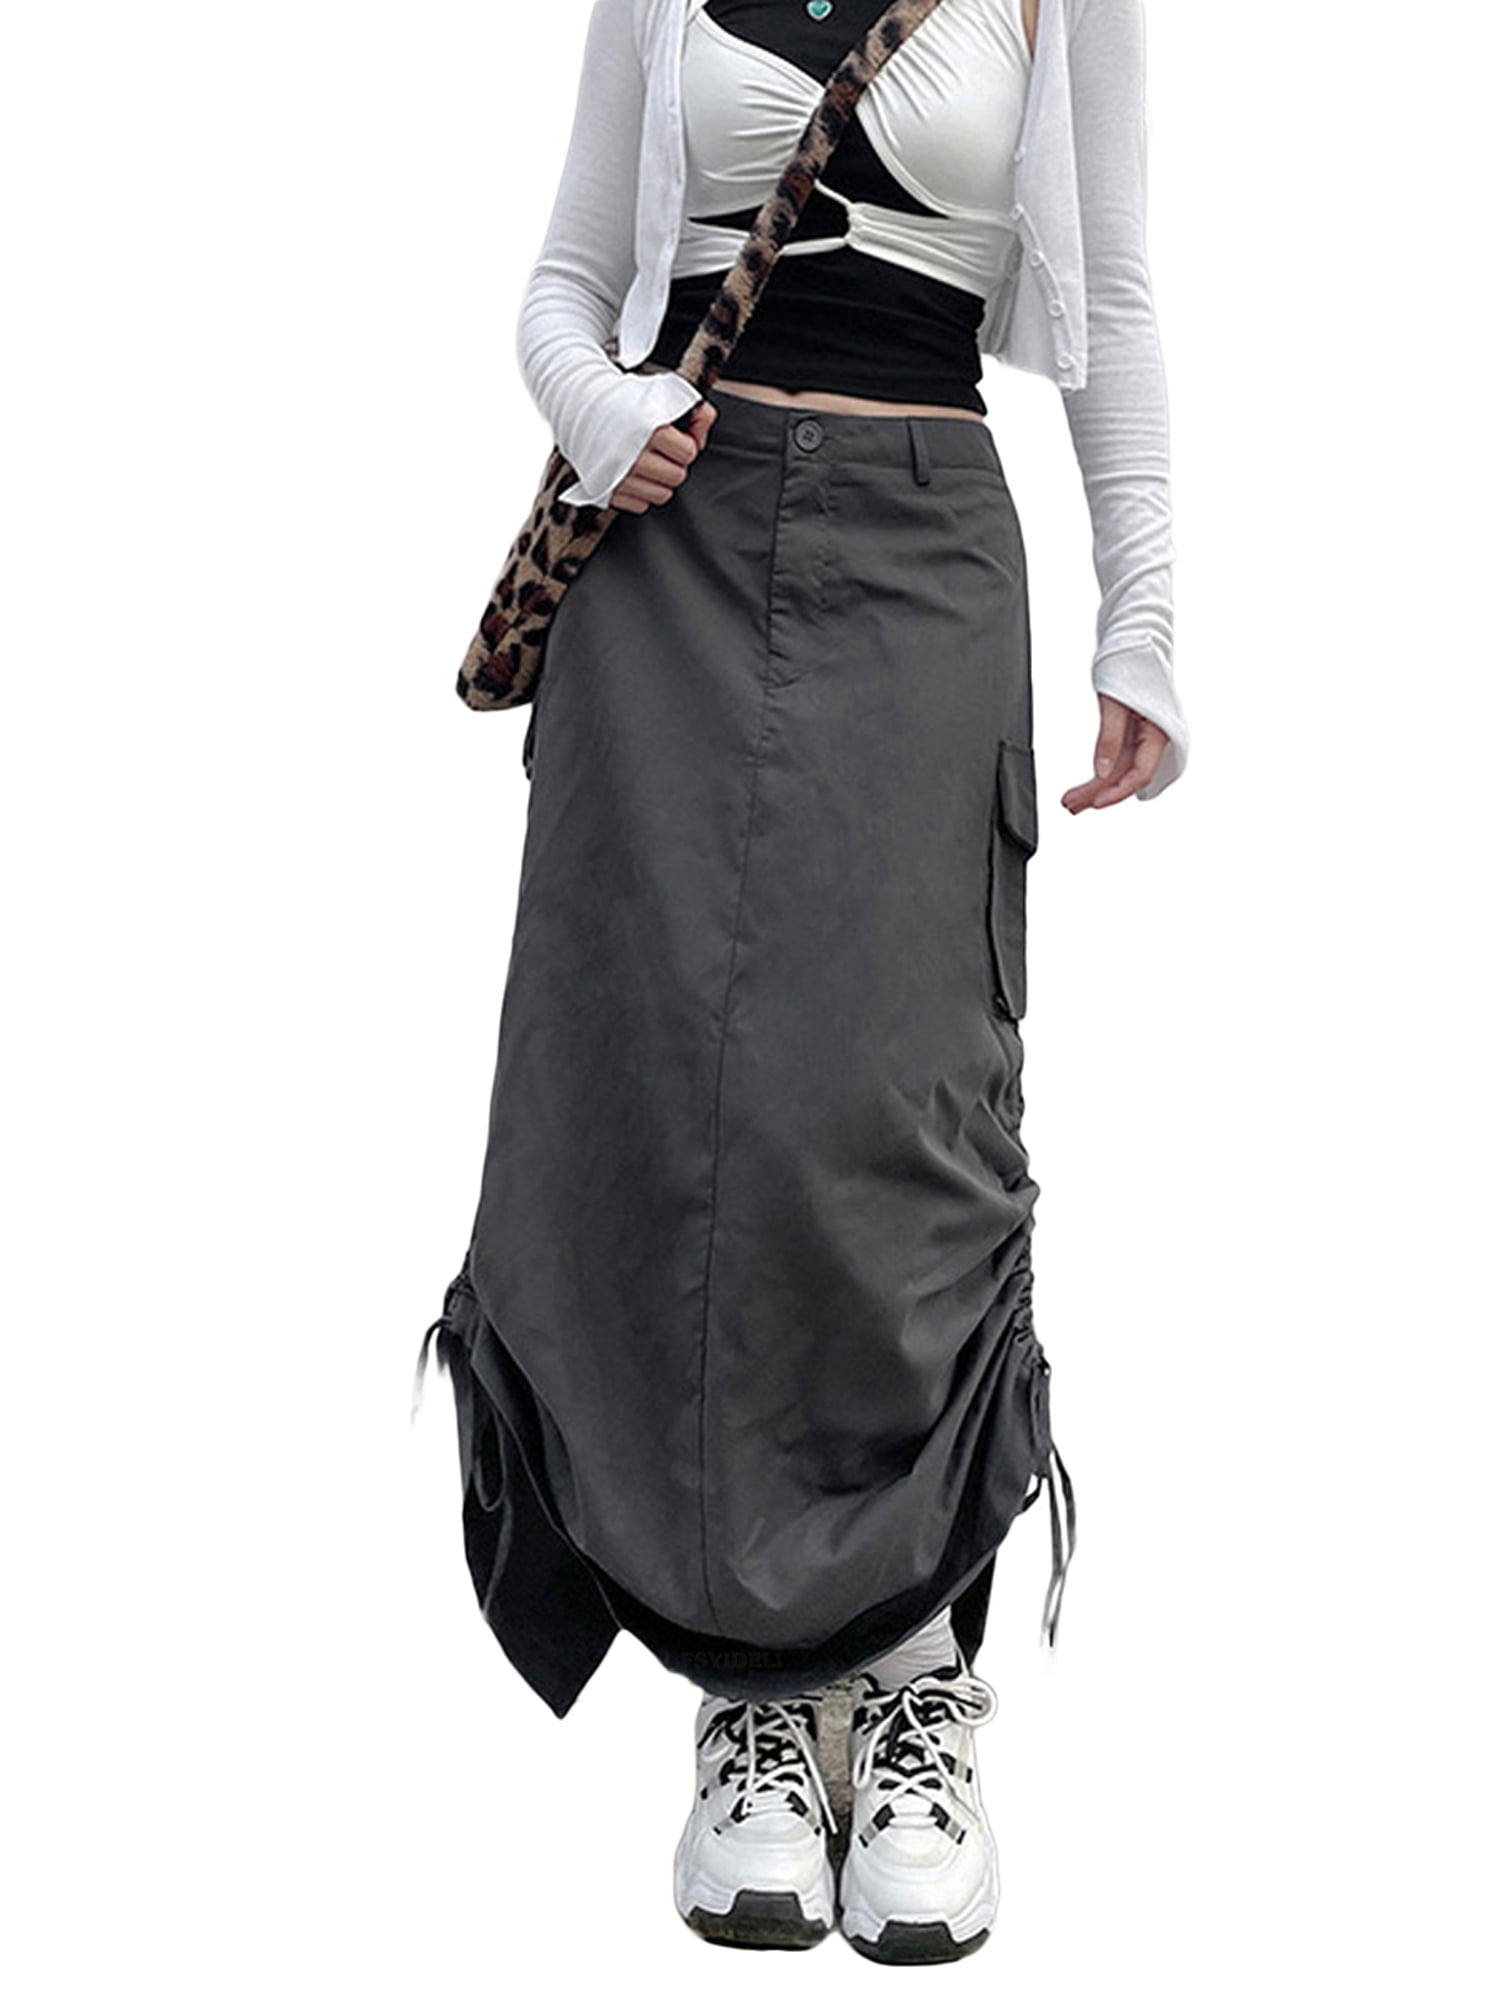 Long Skirt Women Solid Color High Waist Shirring Fashion Ankle-Length Maxi Skirt 